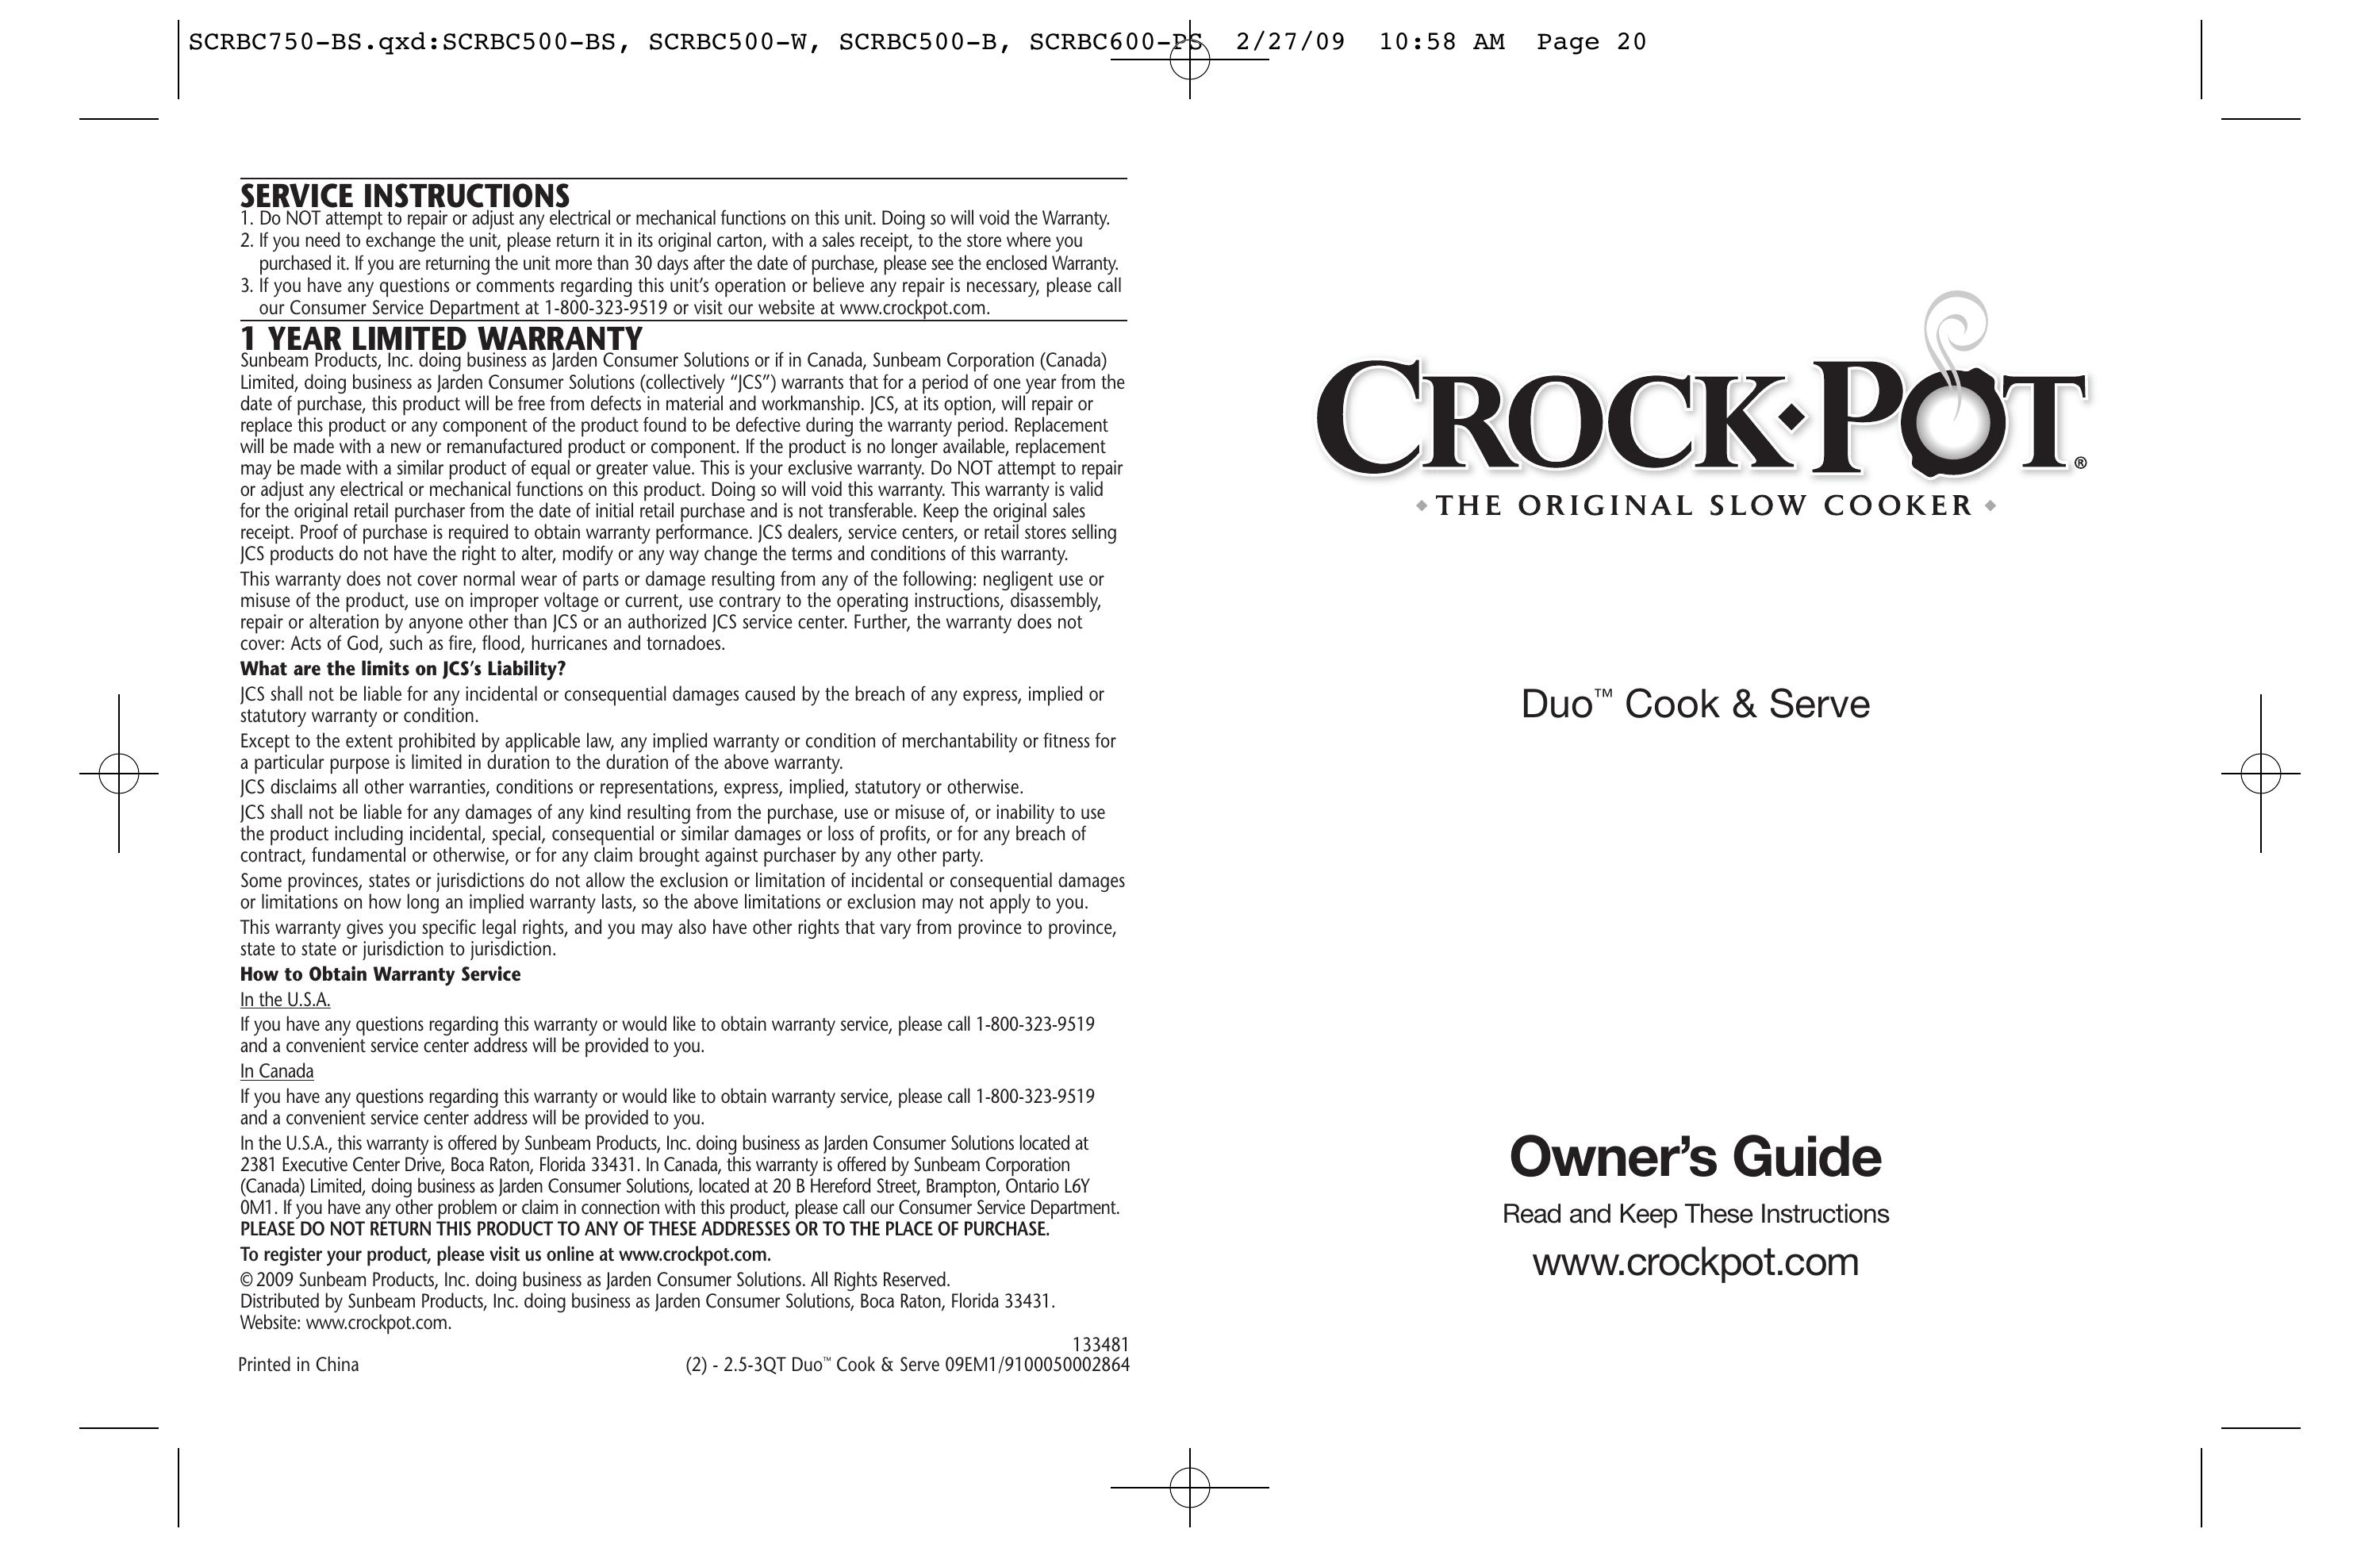 Crock-Pot 133481 Slow Cooker User Manual